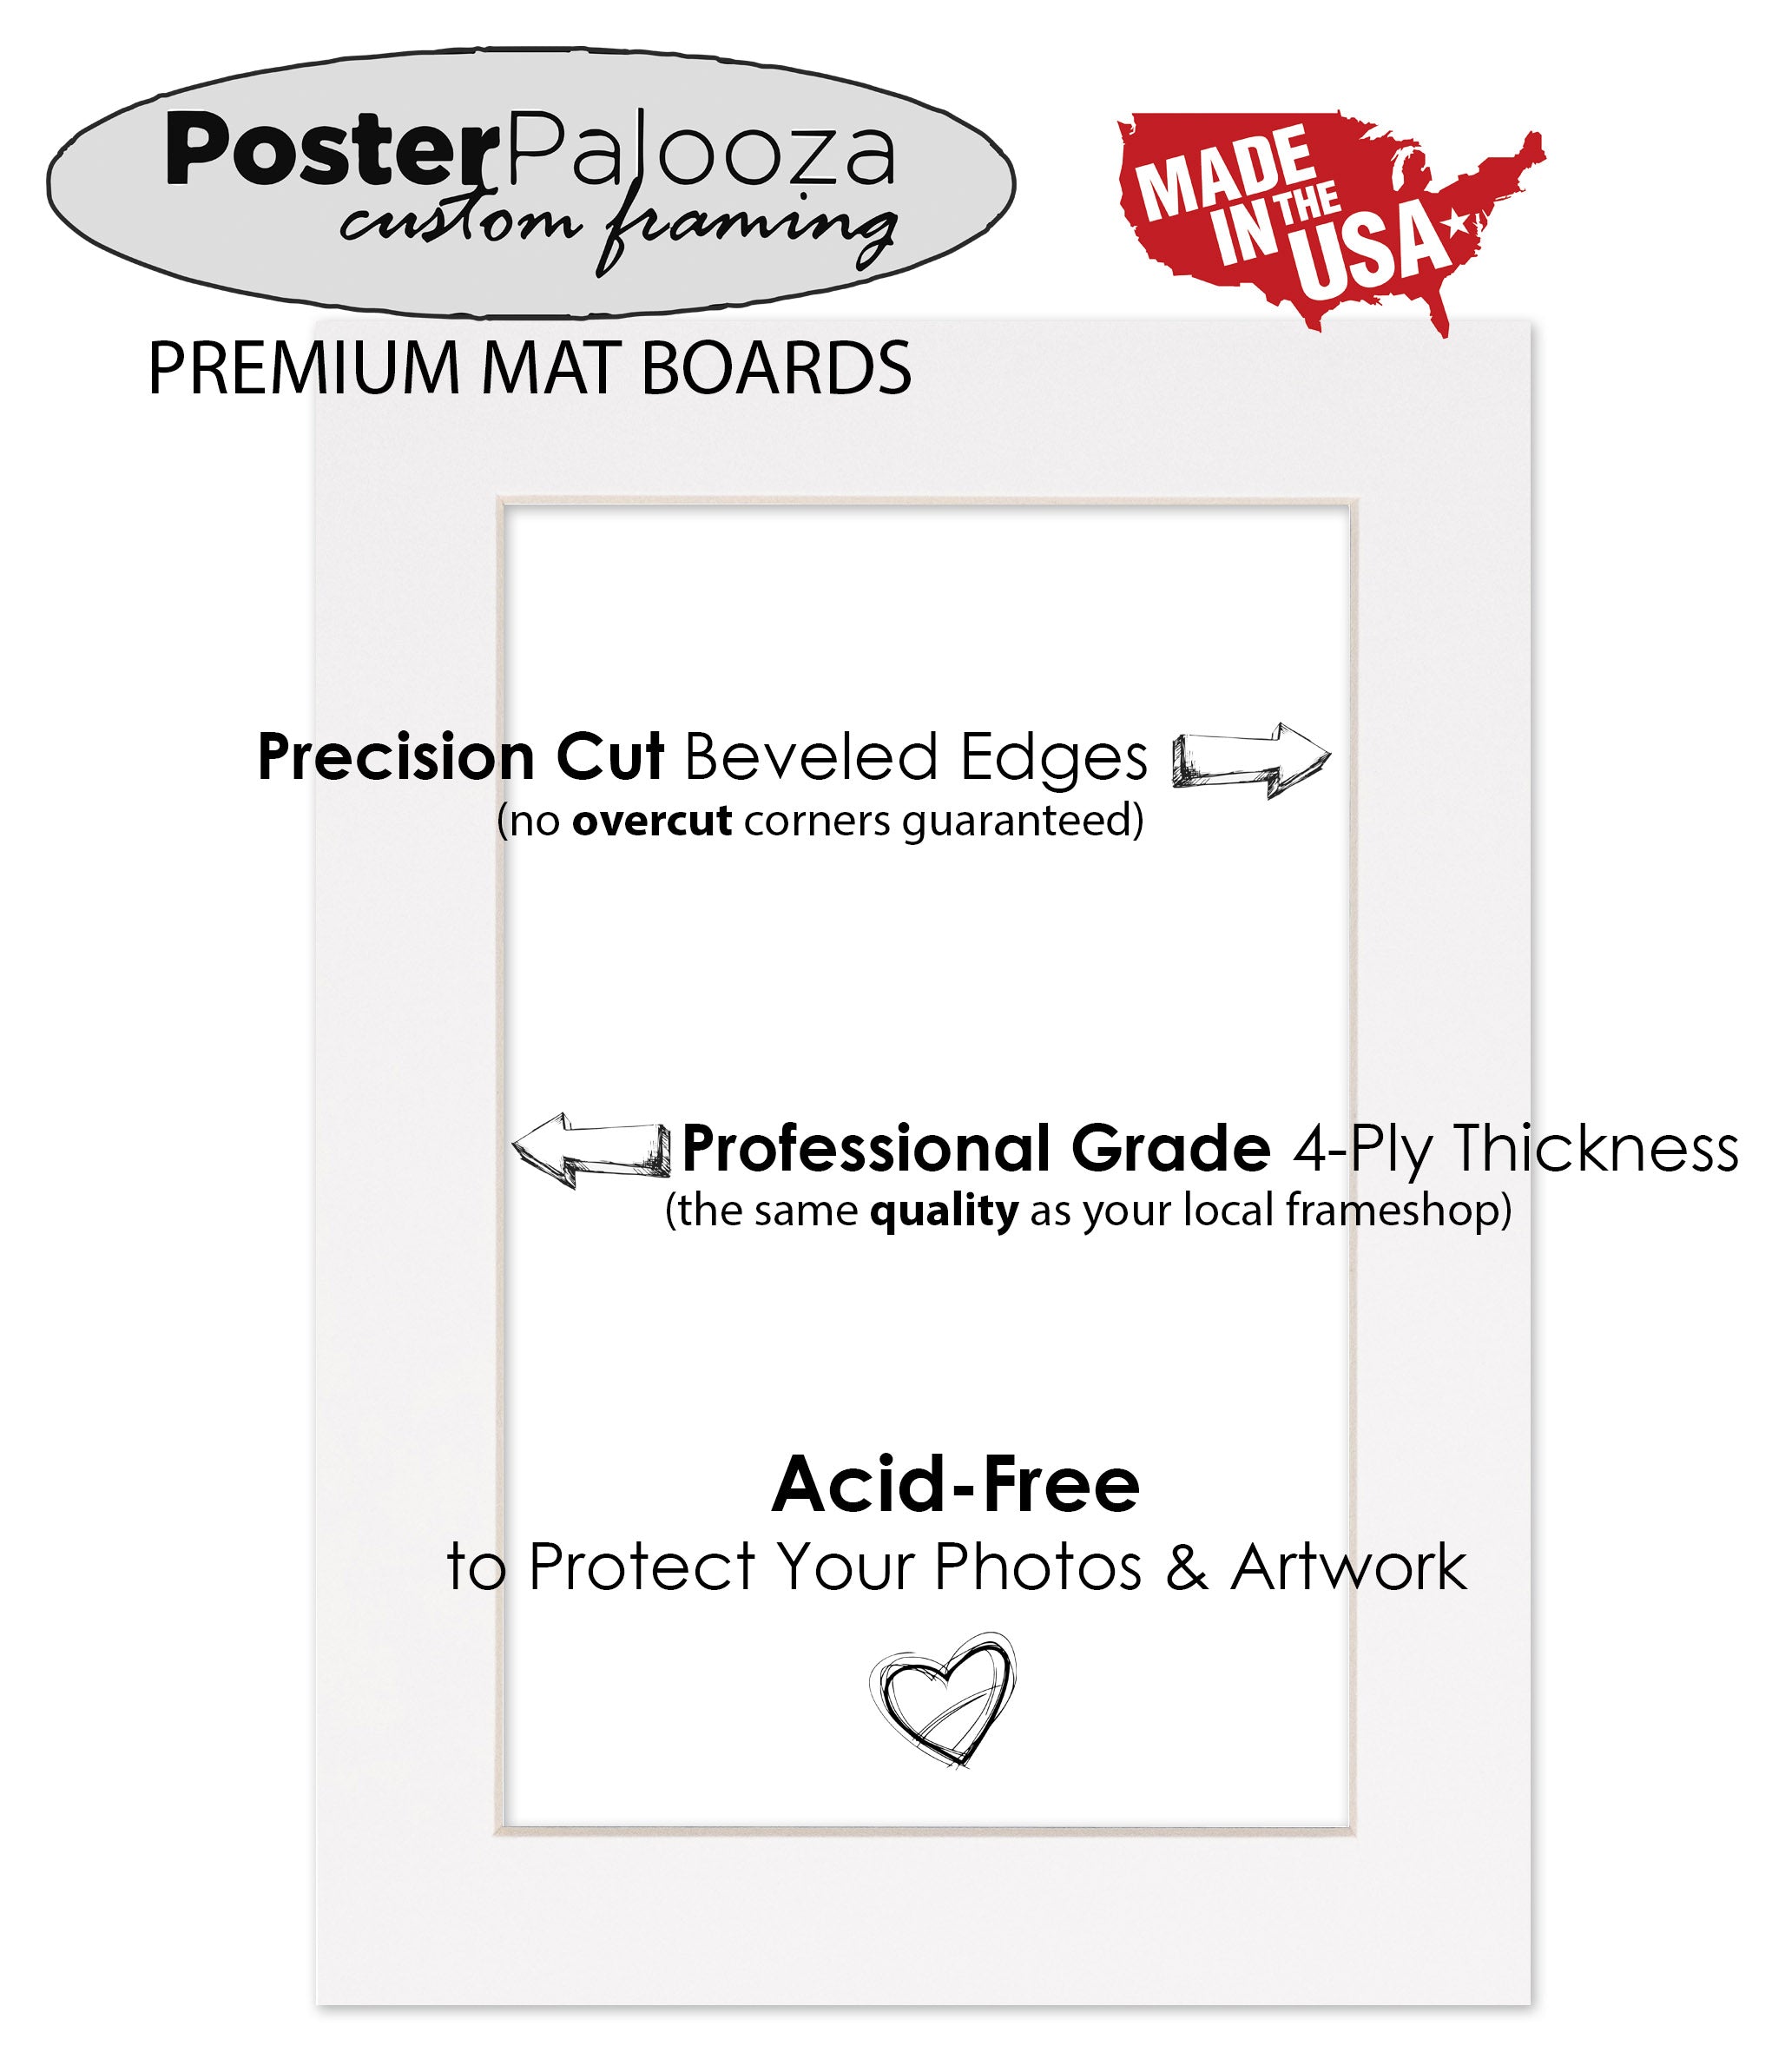 Pack of 10 Charcoal Grey Precut Acid-Free Matboards